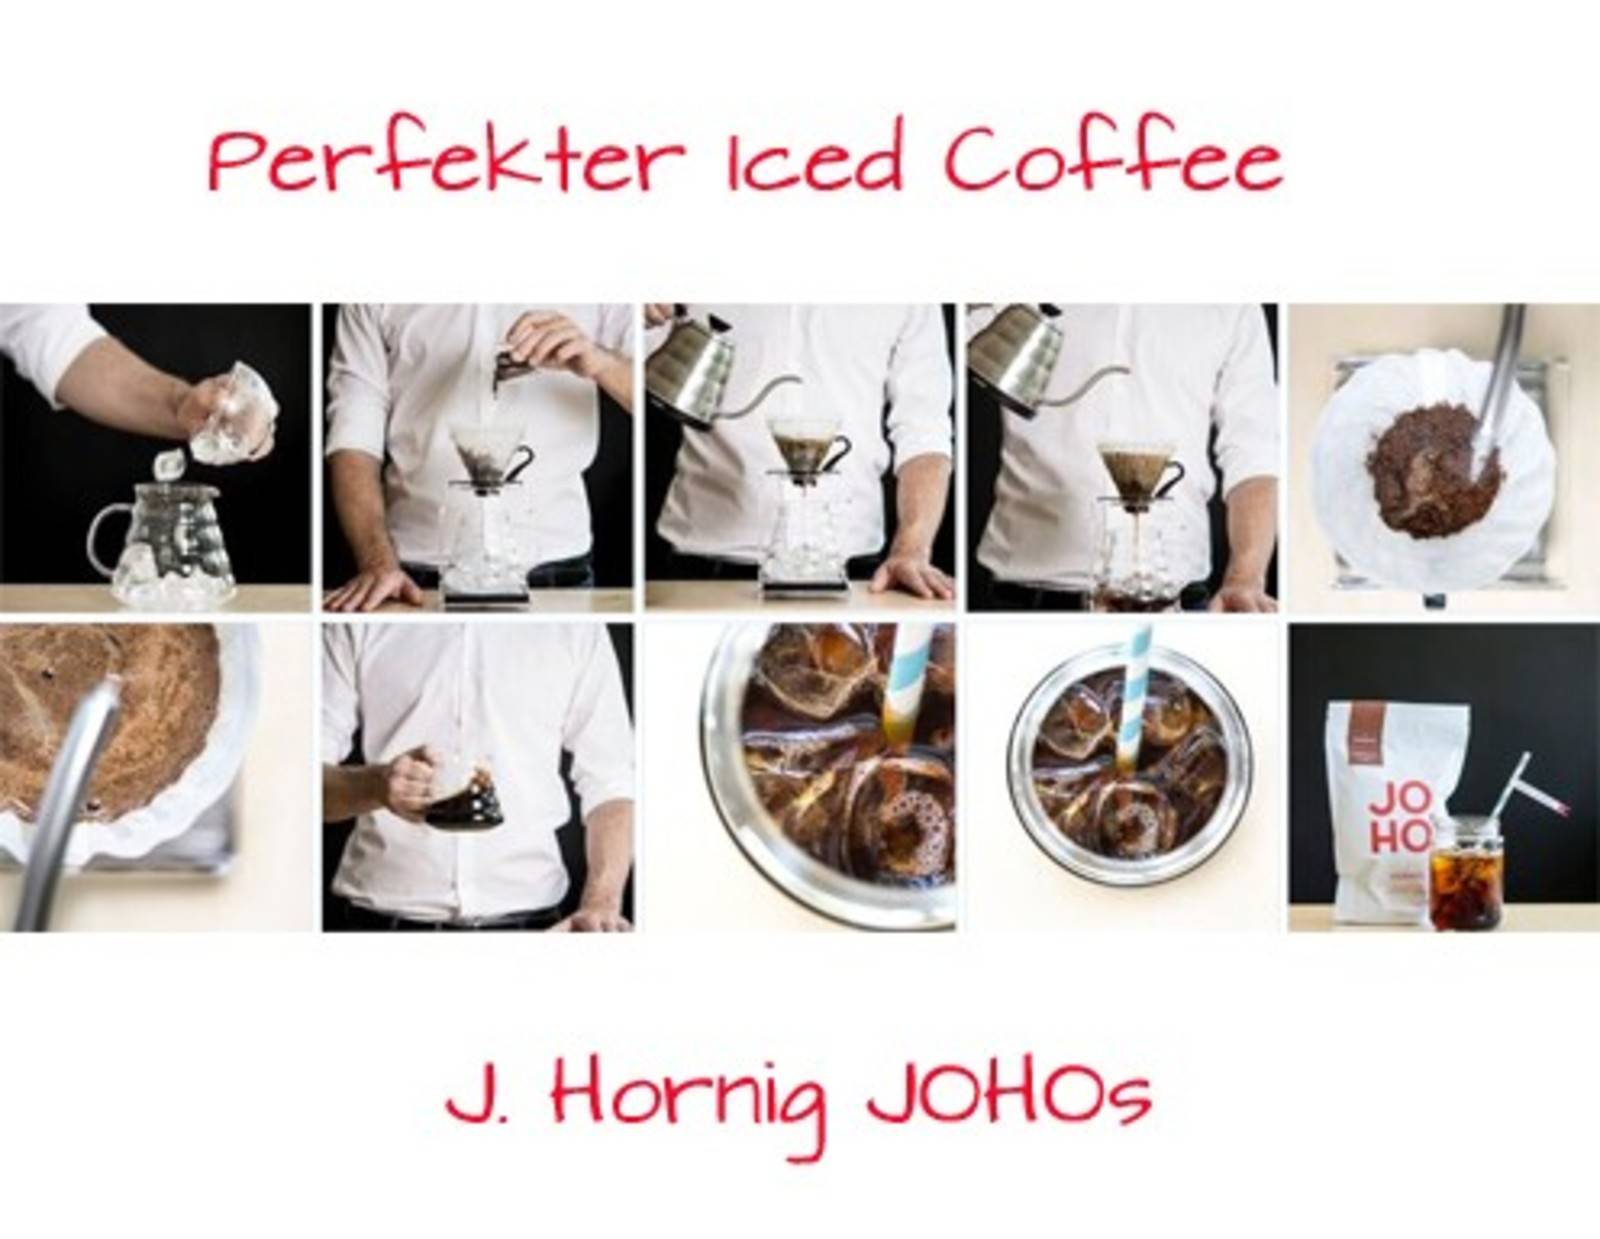 Iced Coffe by Hornig